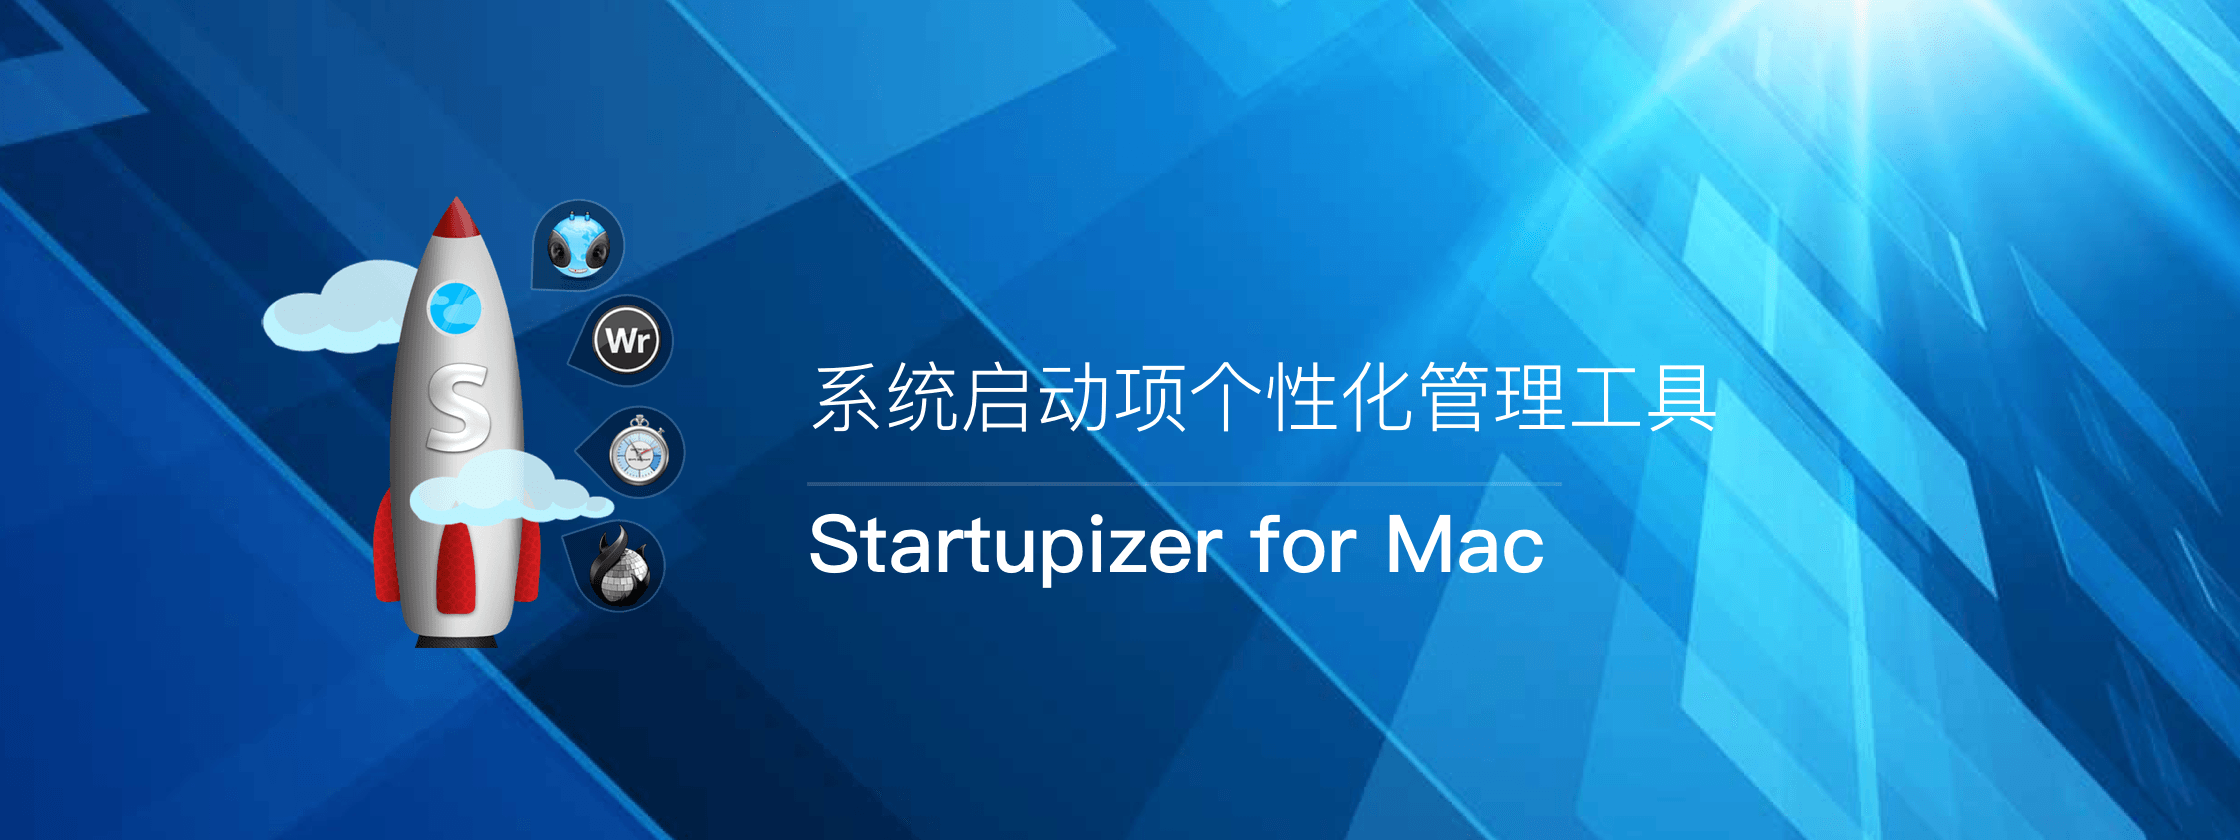 Startupizer for Mac – 系统启动项个性化管理工具